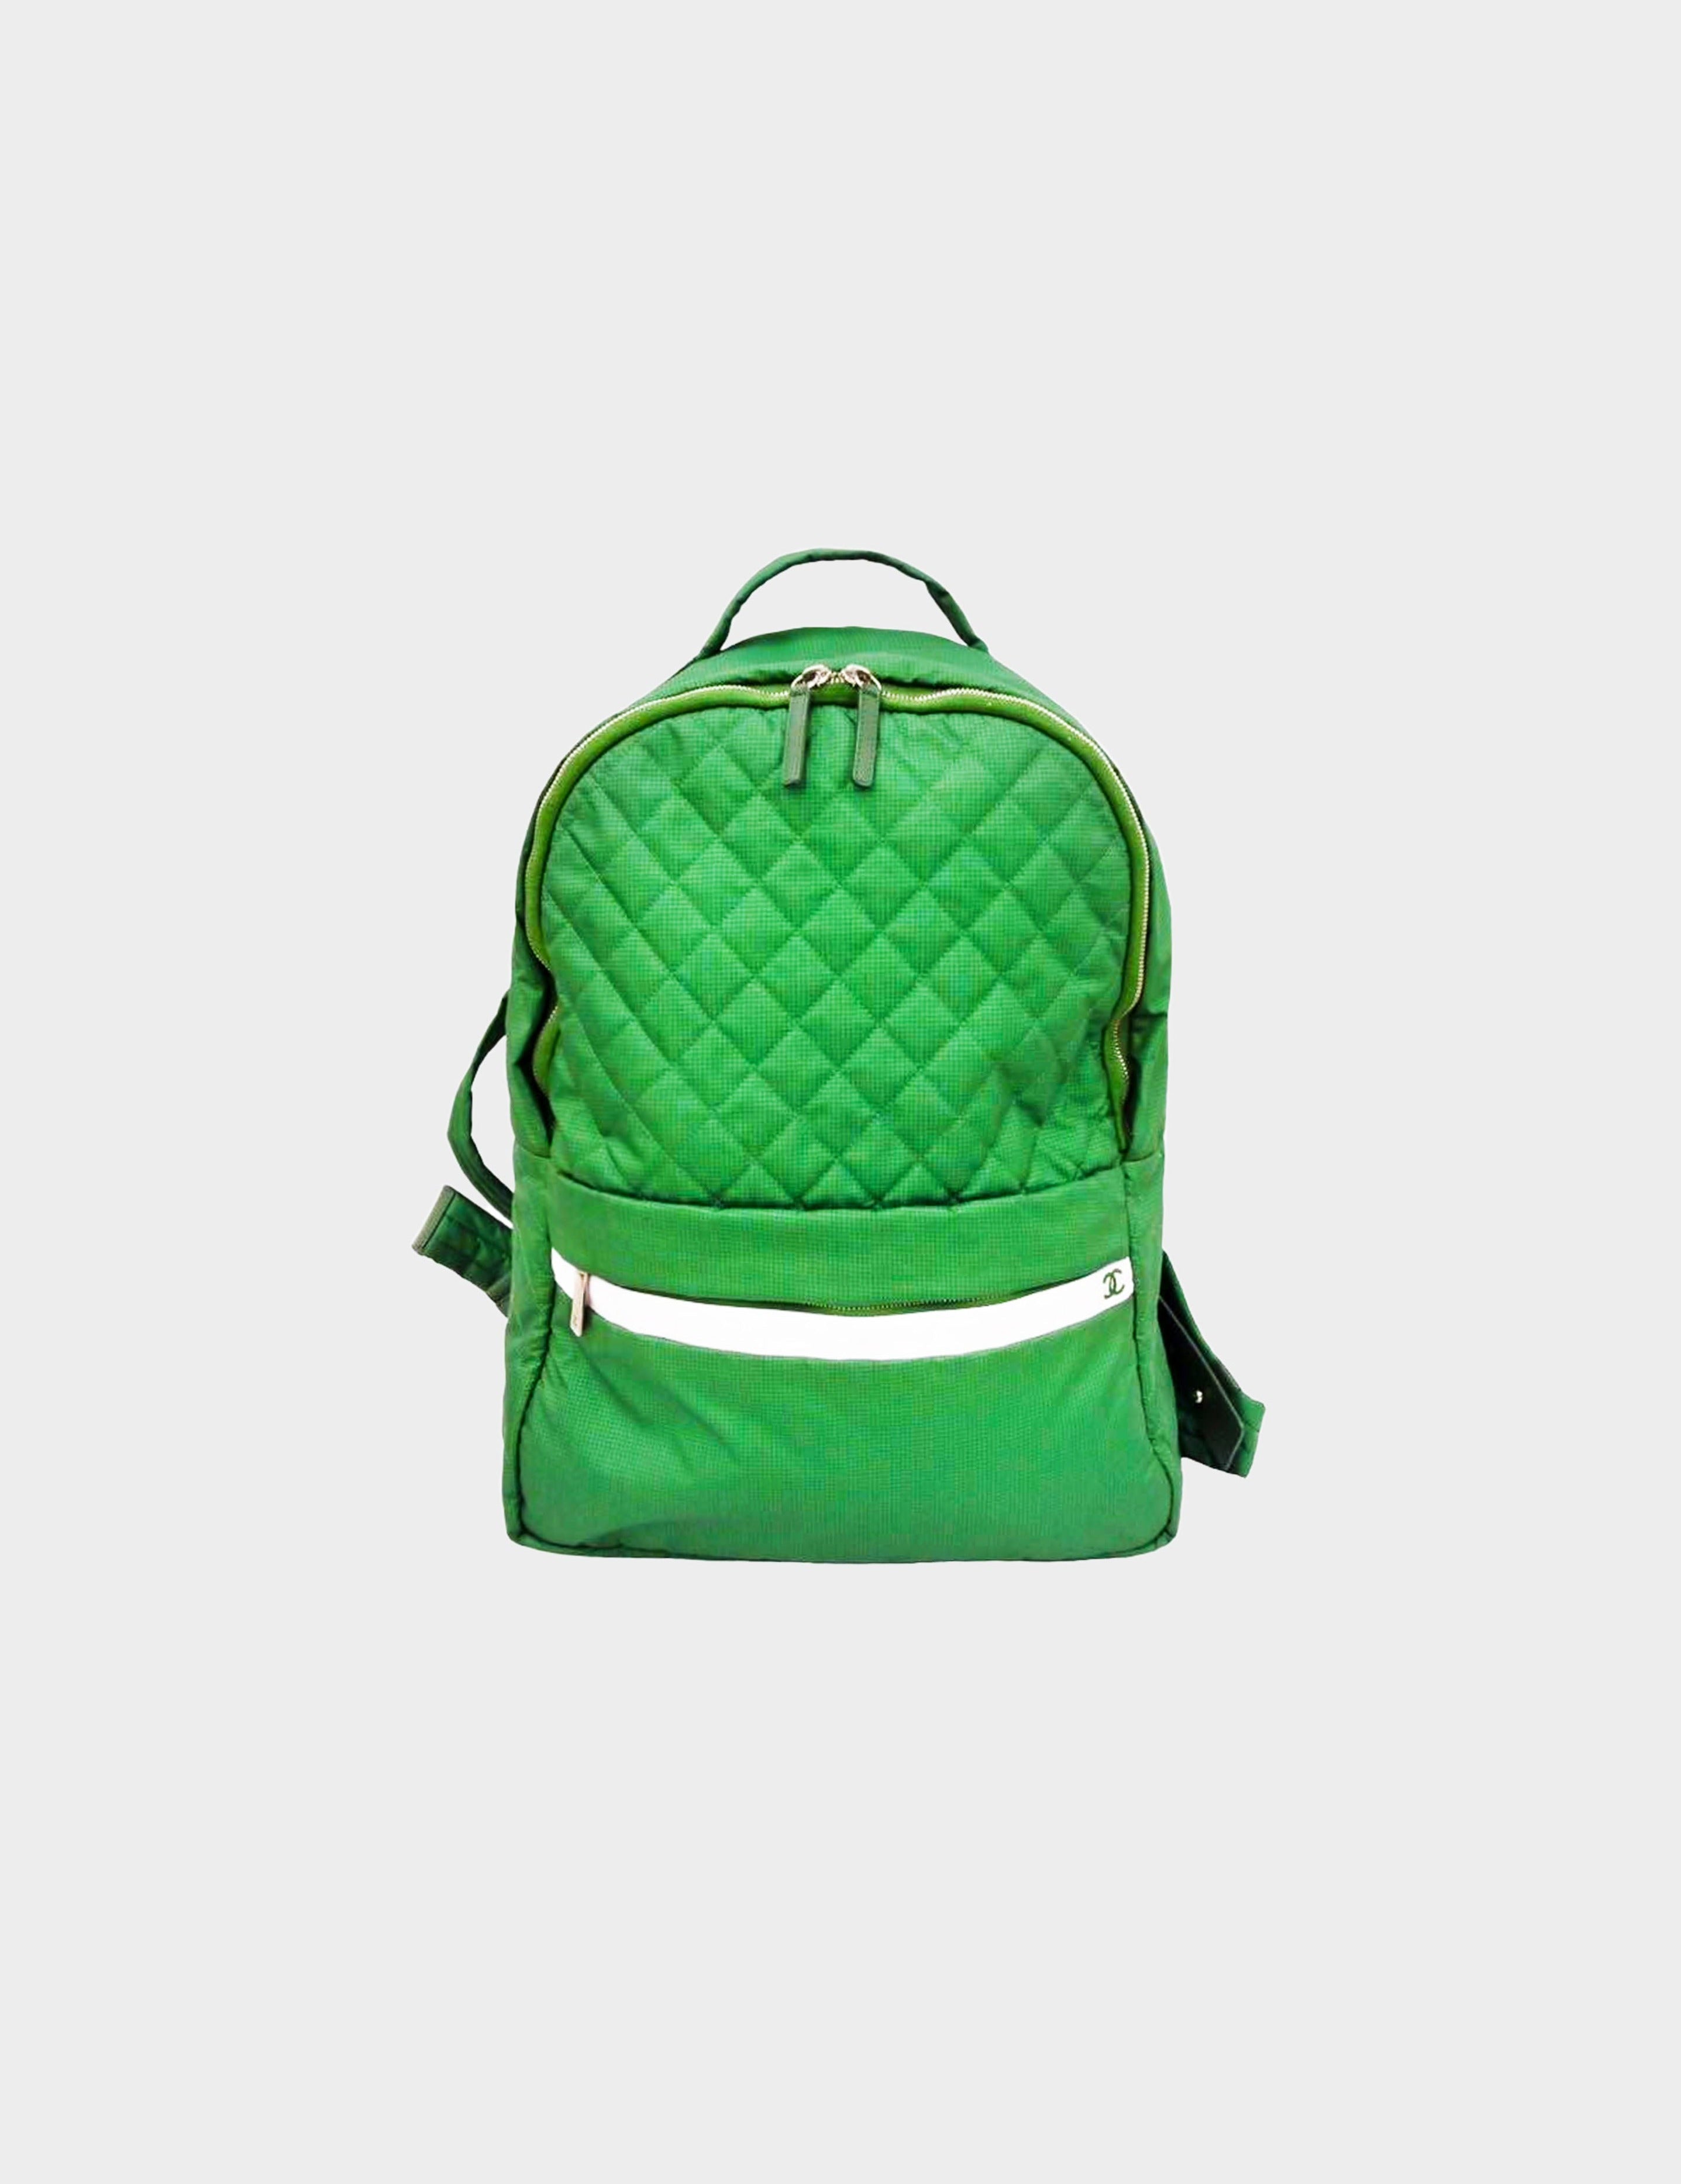 Chanel 2014-2015 Green Nylon Backpack